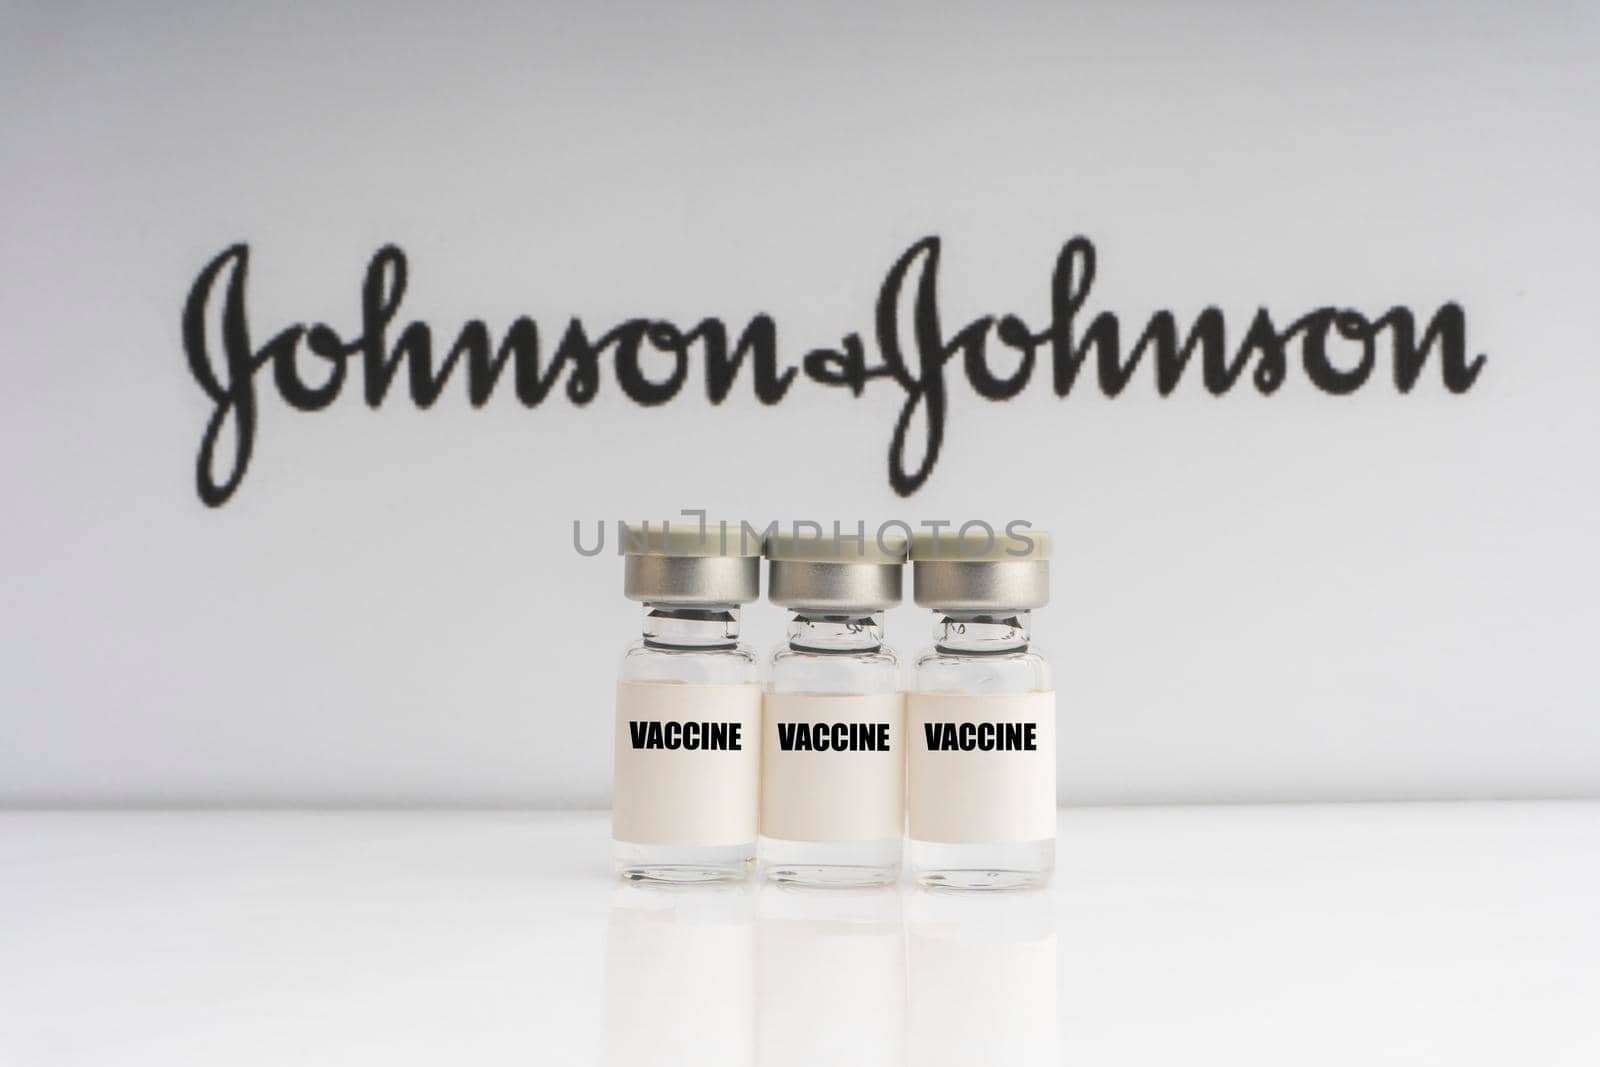 Kuala Lumpur, Malaysia - Mac 2, 2021: Vials vaccine on blurry Johnson & Johnson background. by silverwings